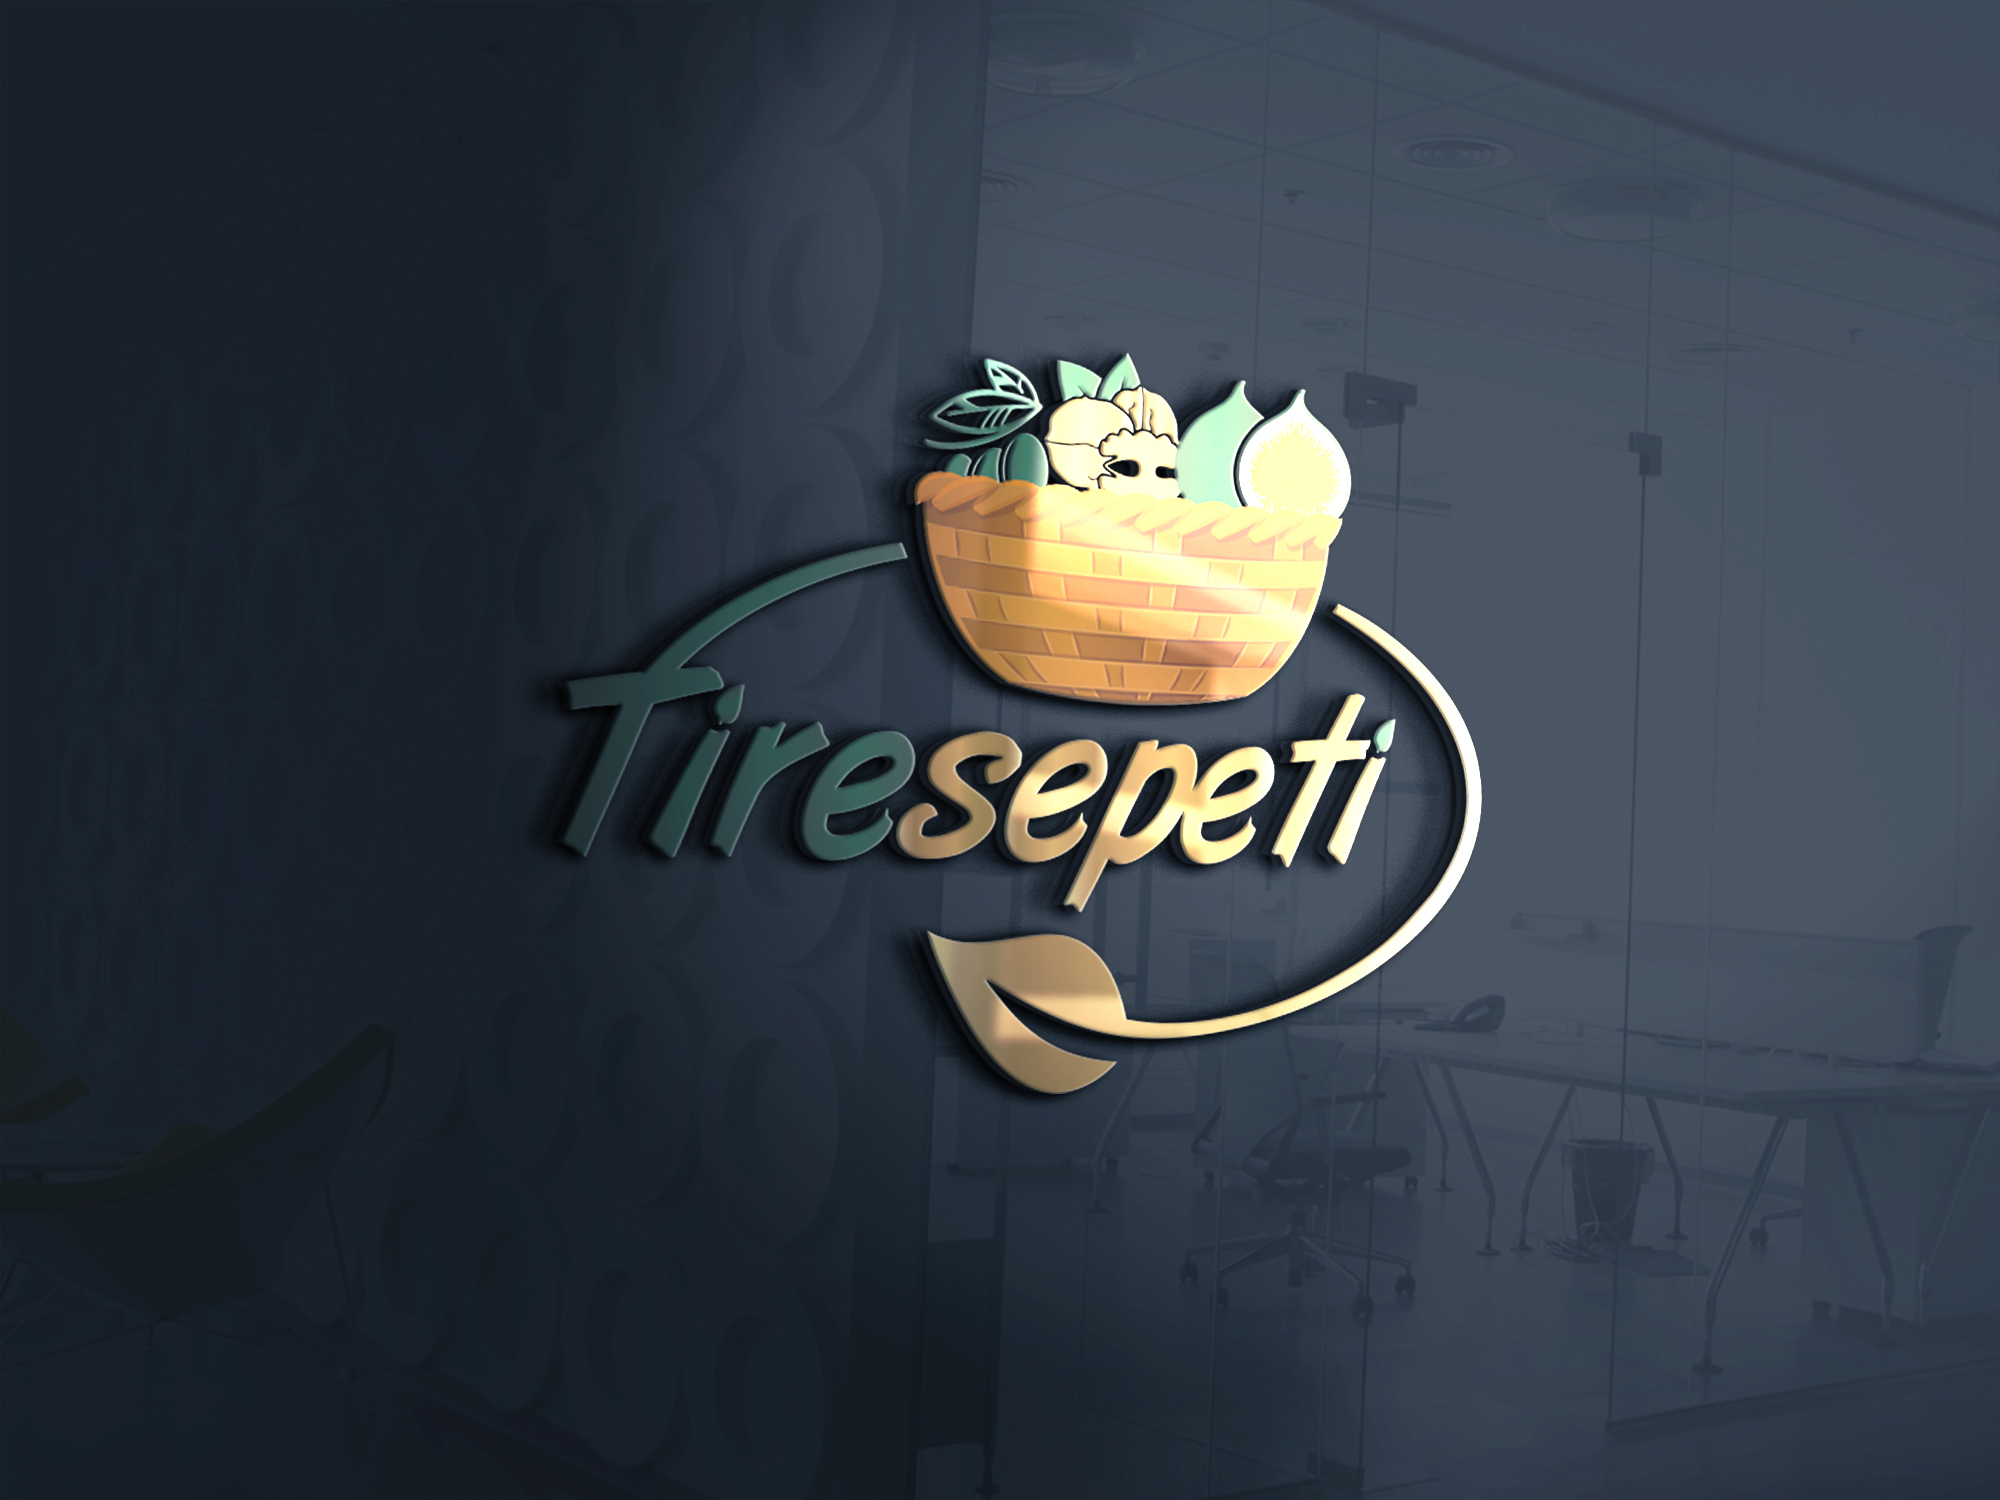 TireSepeti